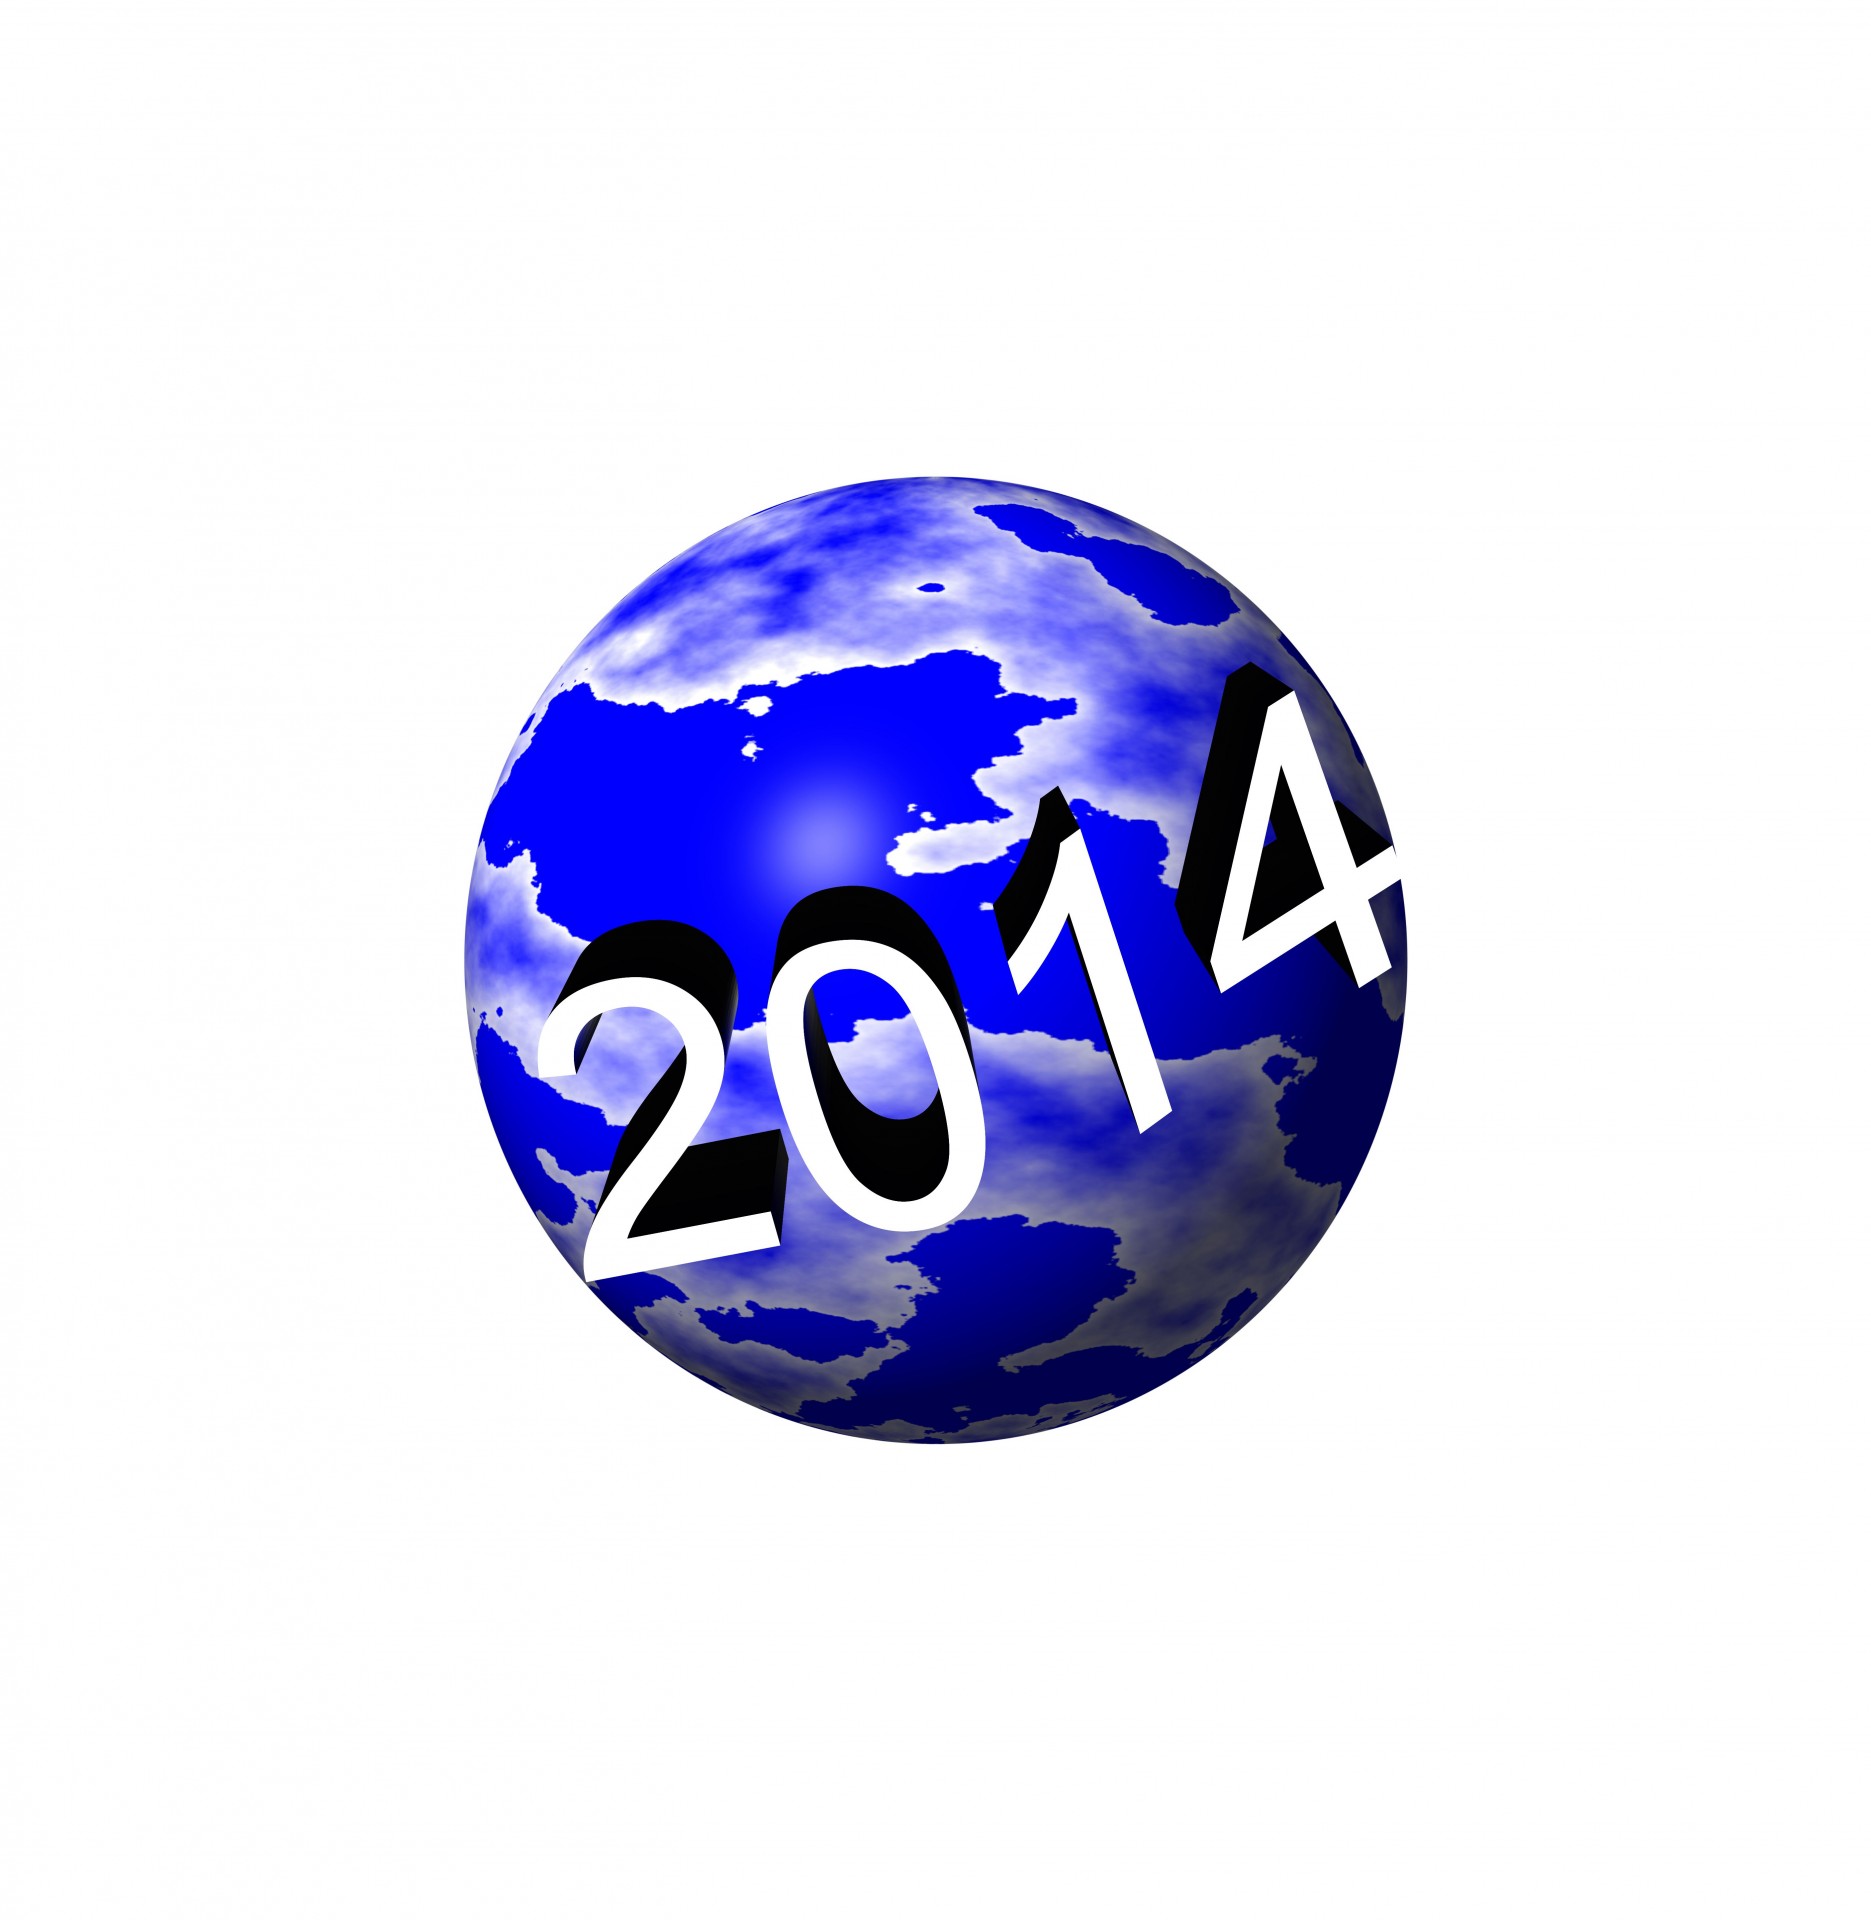 2014 World